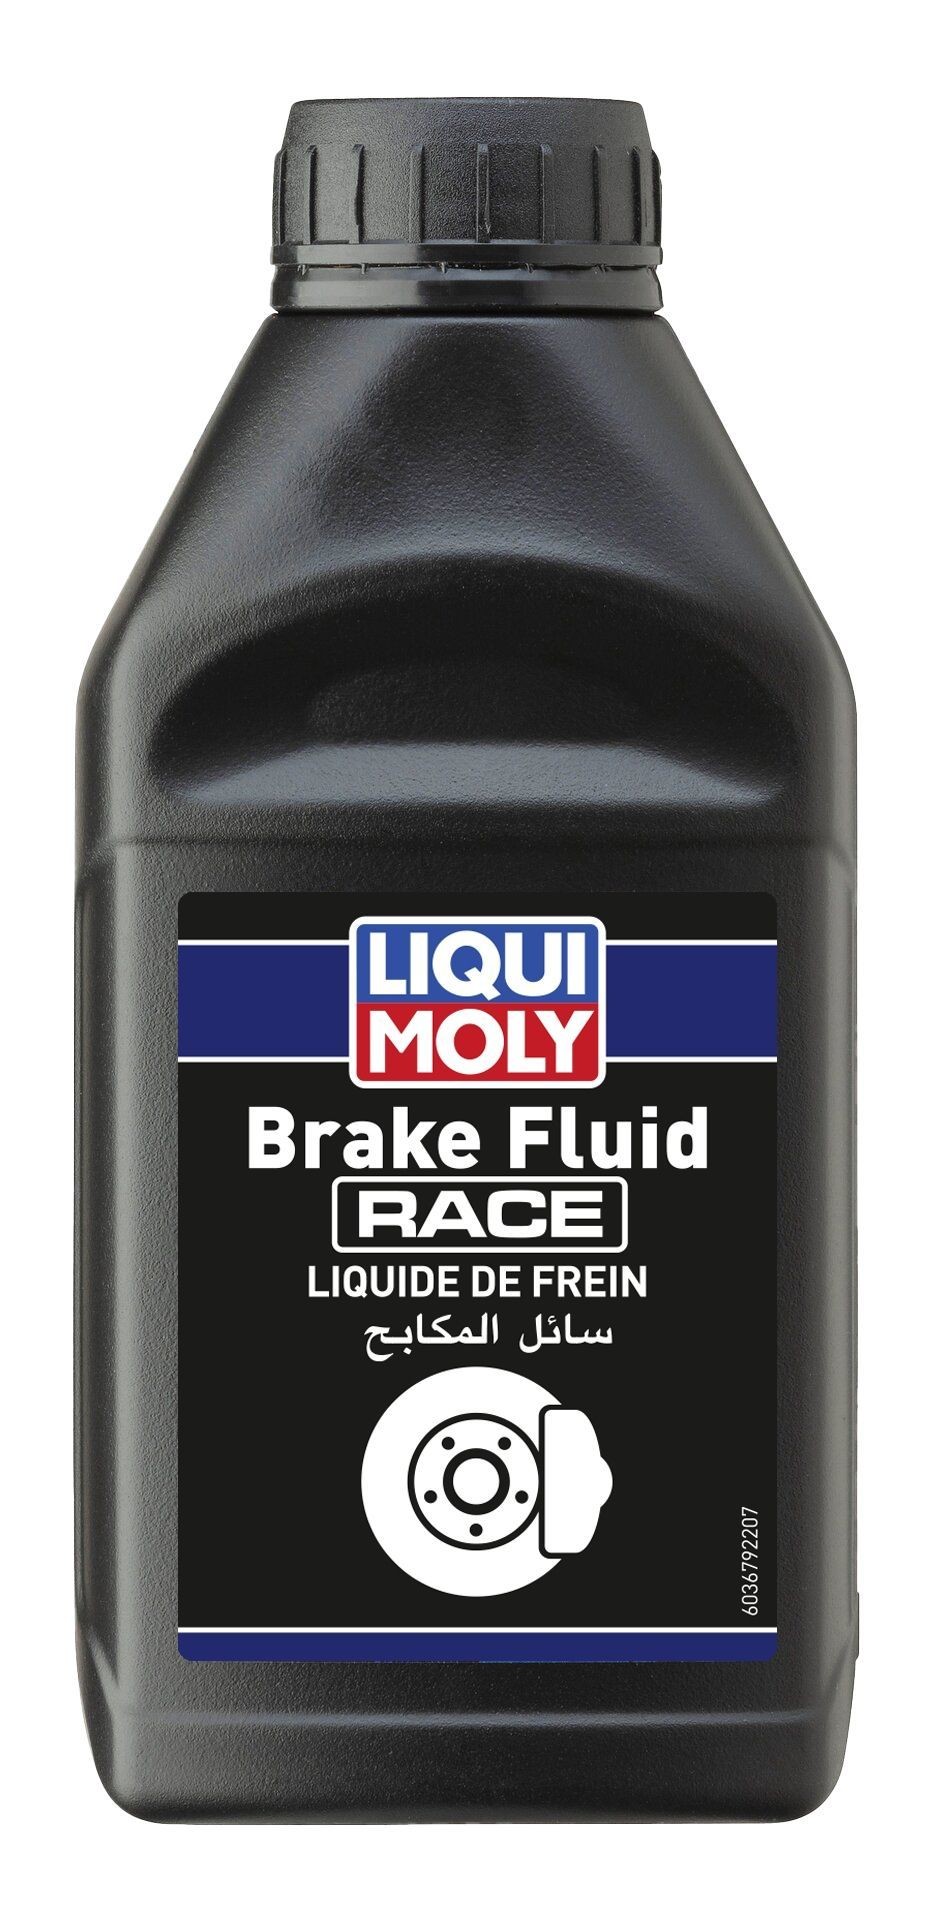 Great value for money - LIQUI MOLY Brake Fluid 3679